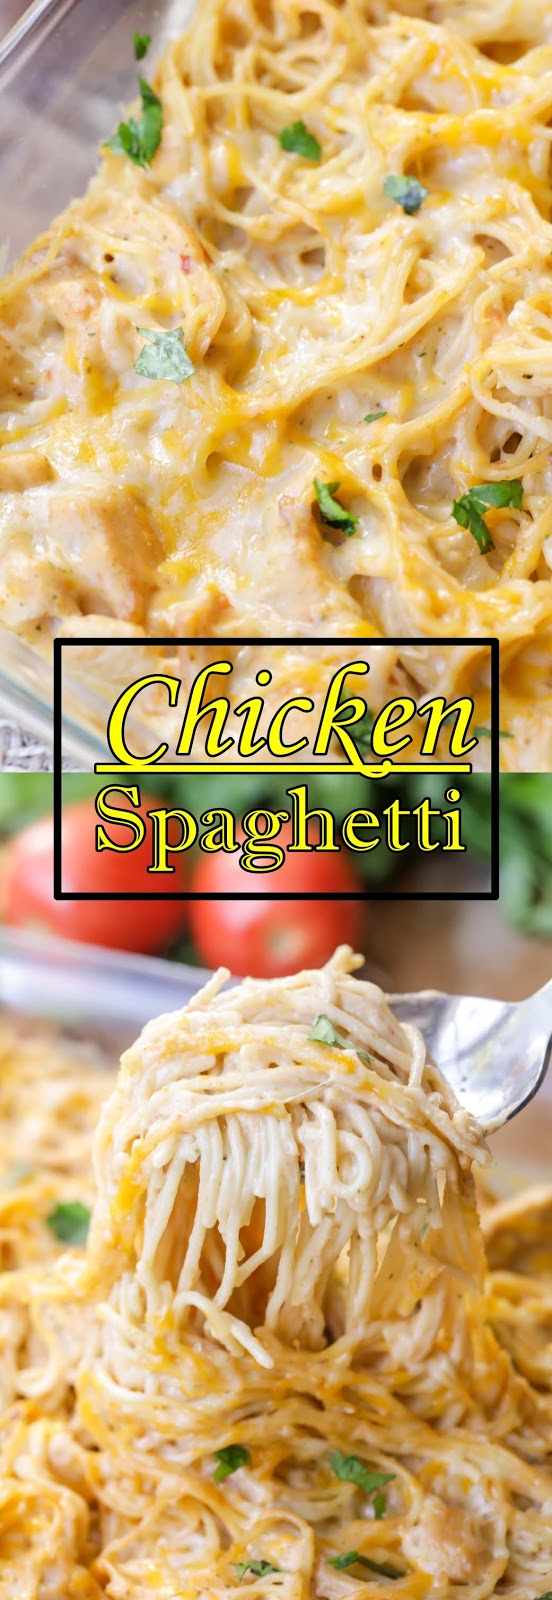 #Chicken #Spaghetti